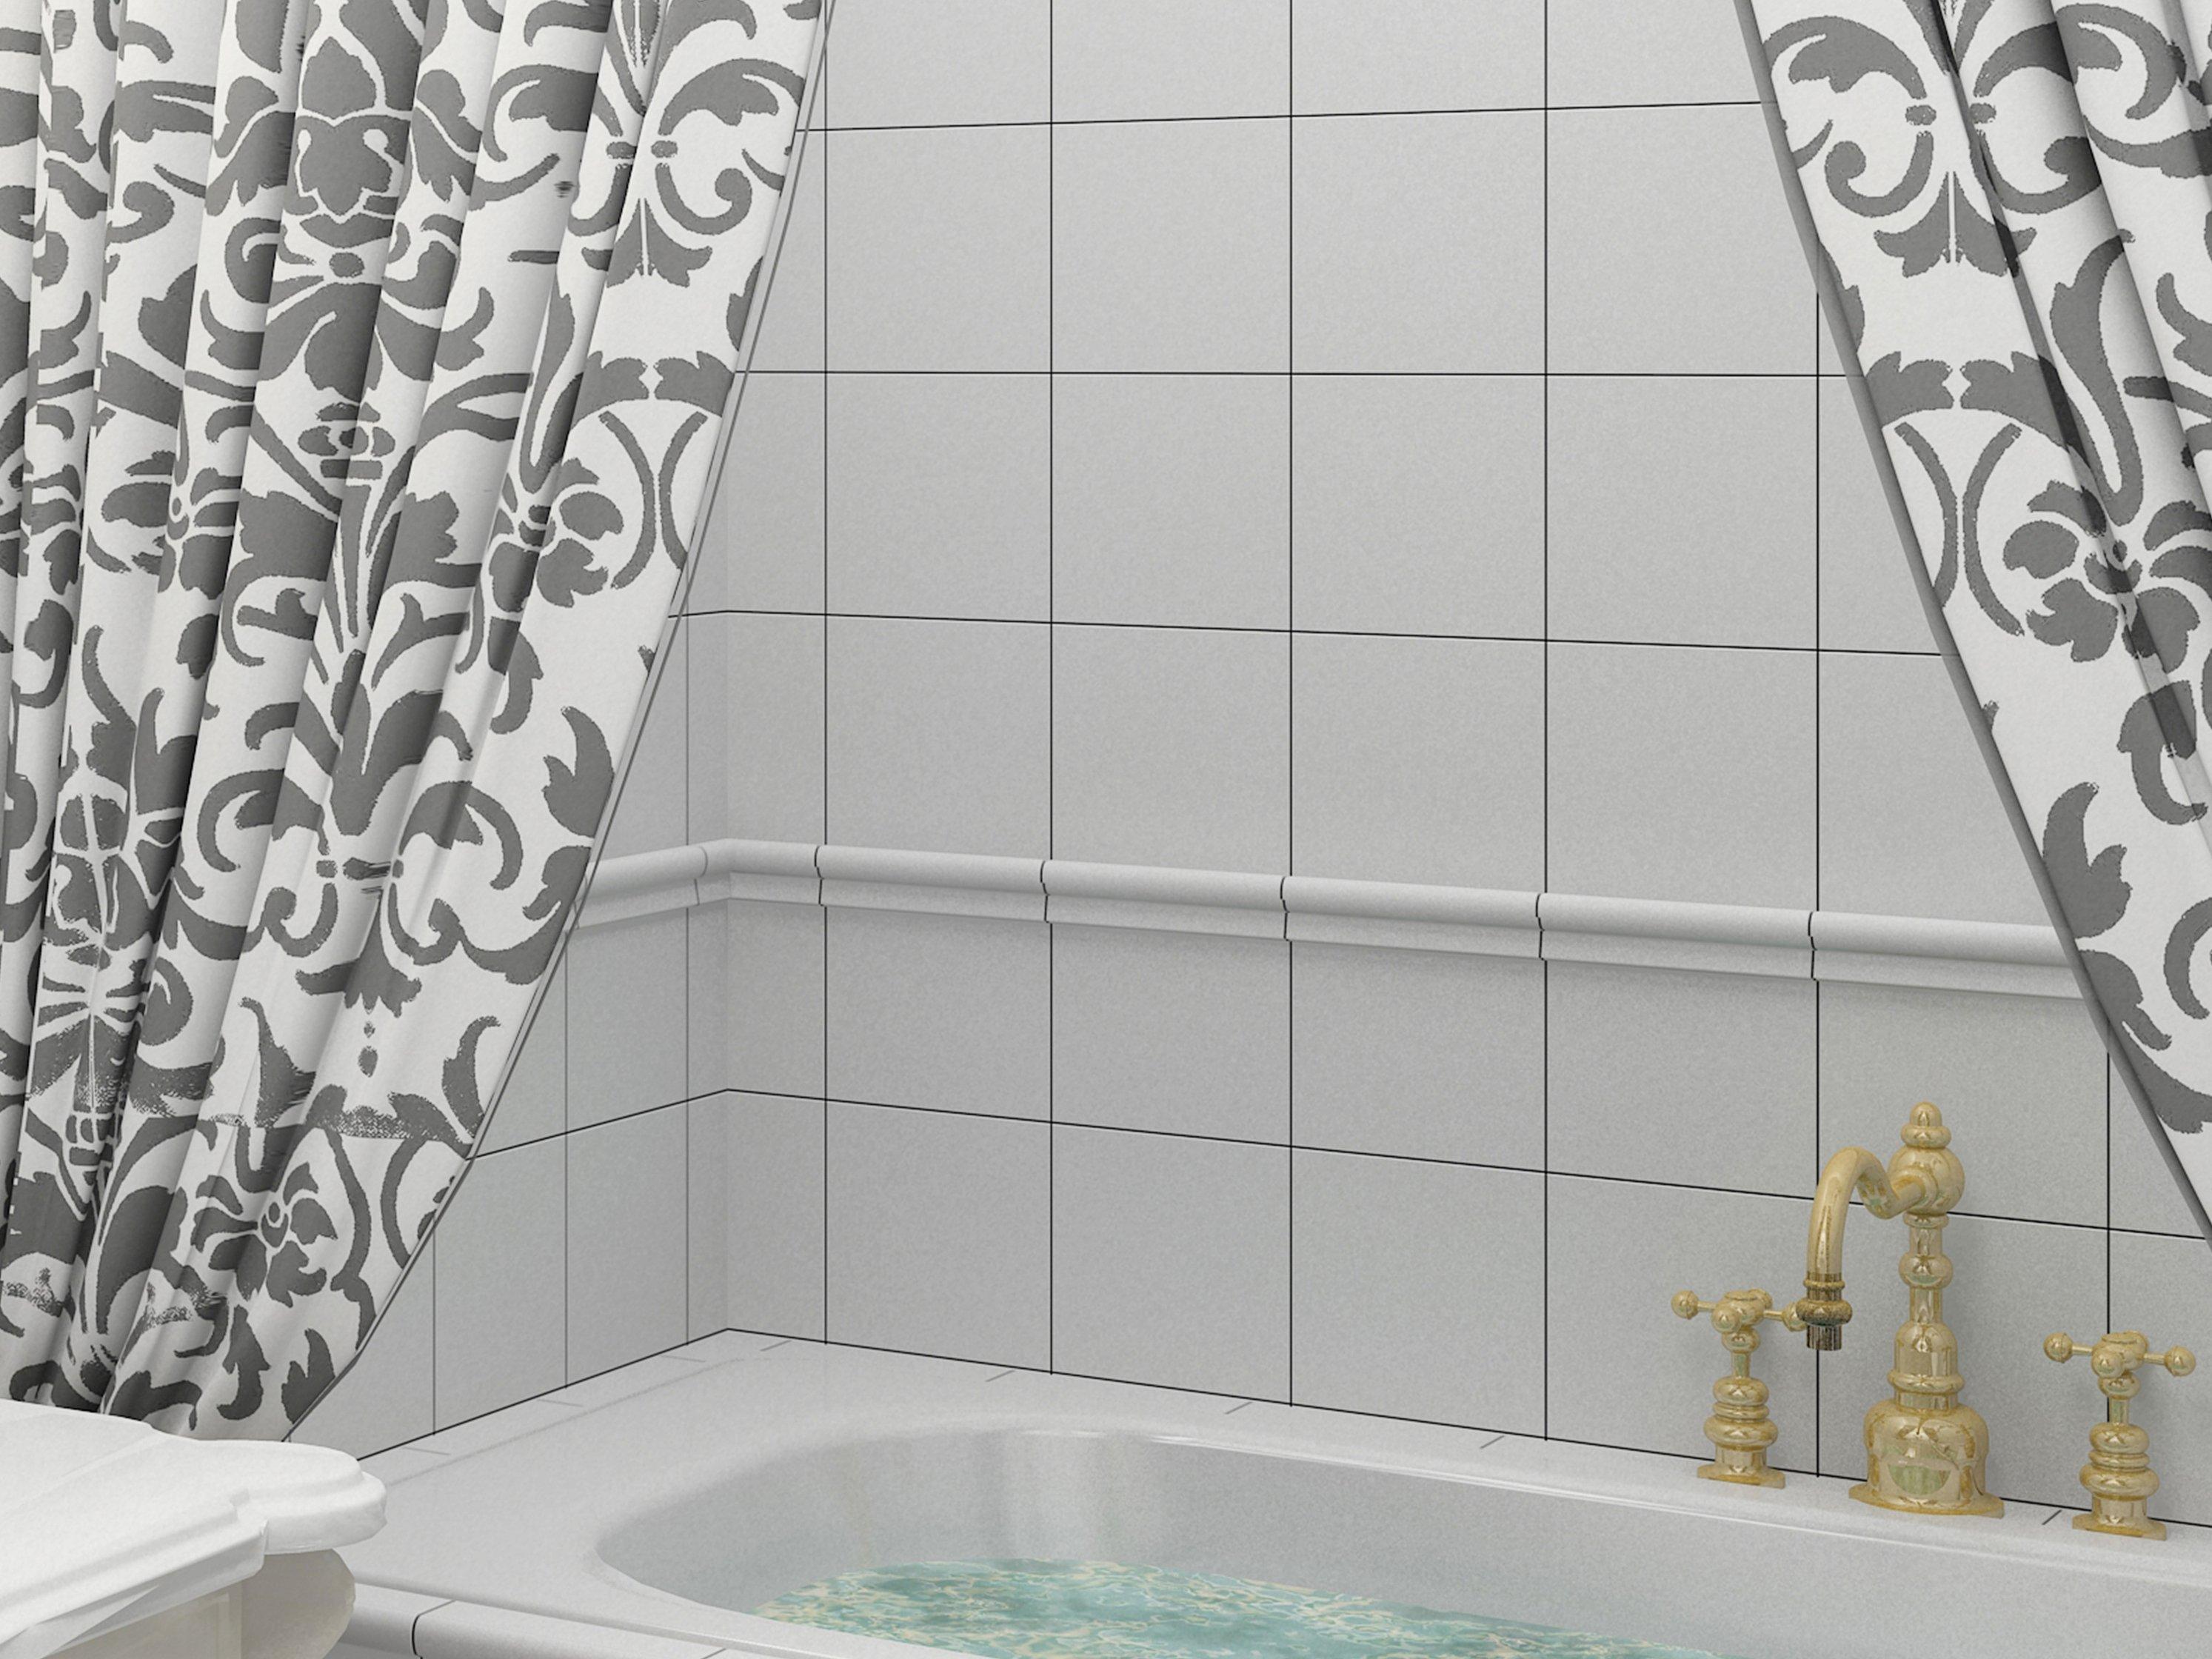 Bright White Ice Ceramic Wall Tile, 6 Inch White Bathroom Tiles